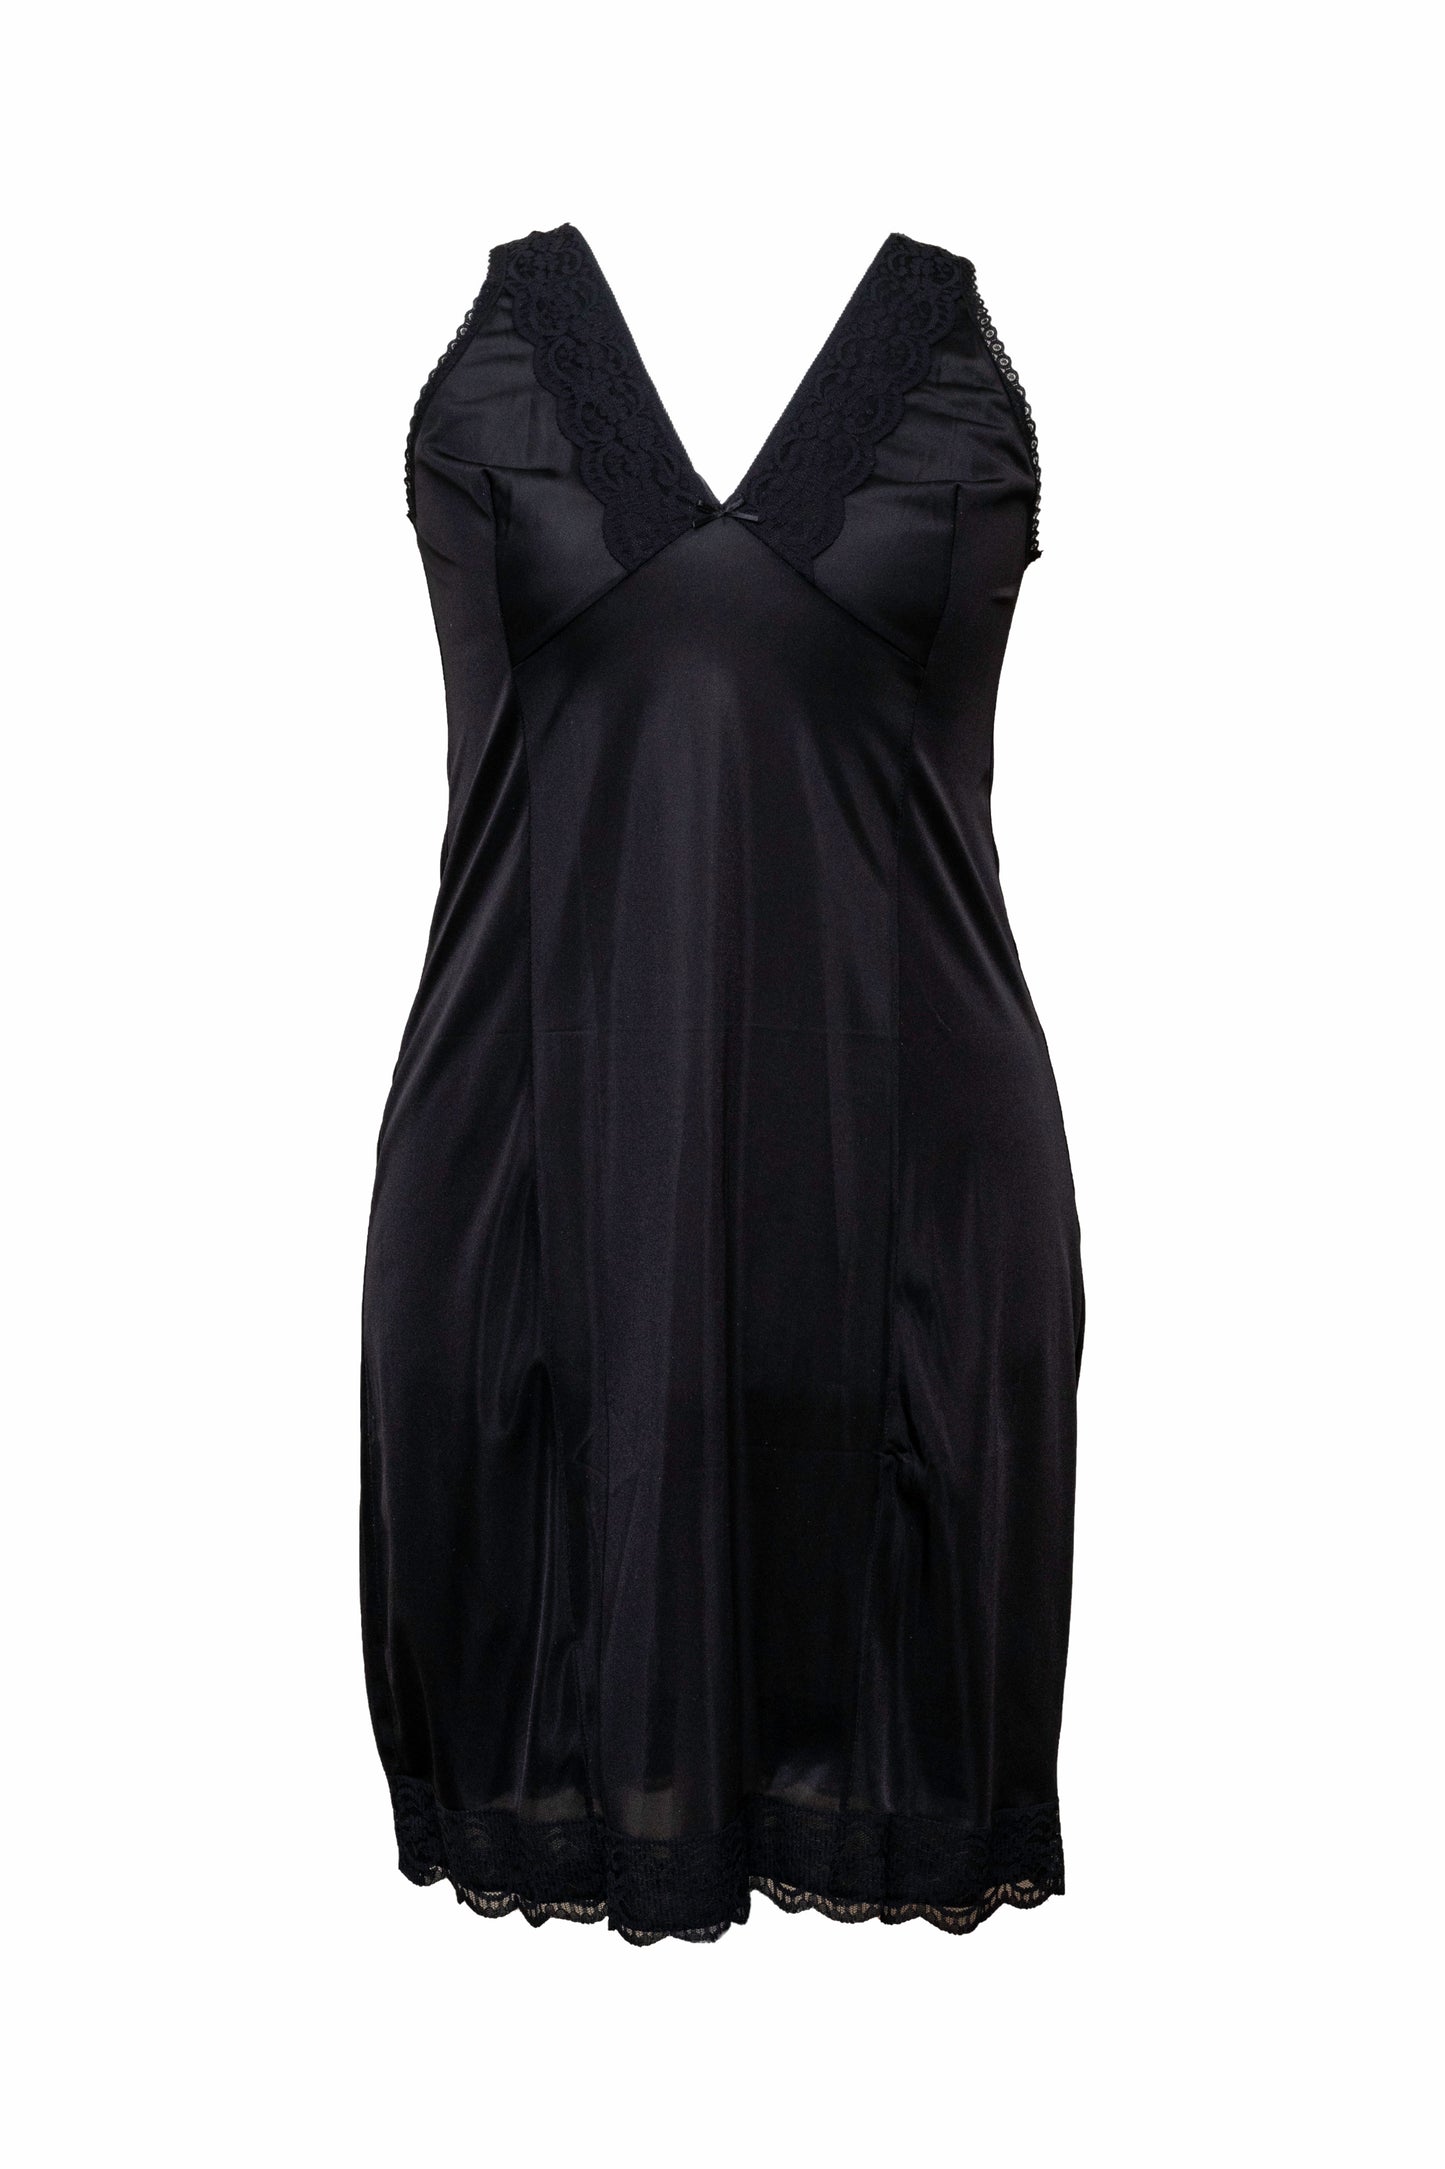 Ladies-Full Slip Petticoat-Built-up Shoulder Strap-Black